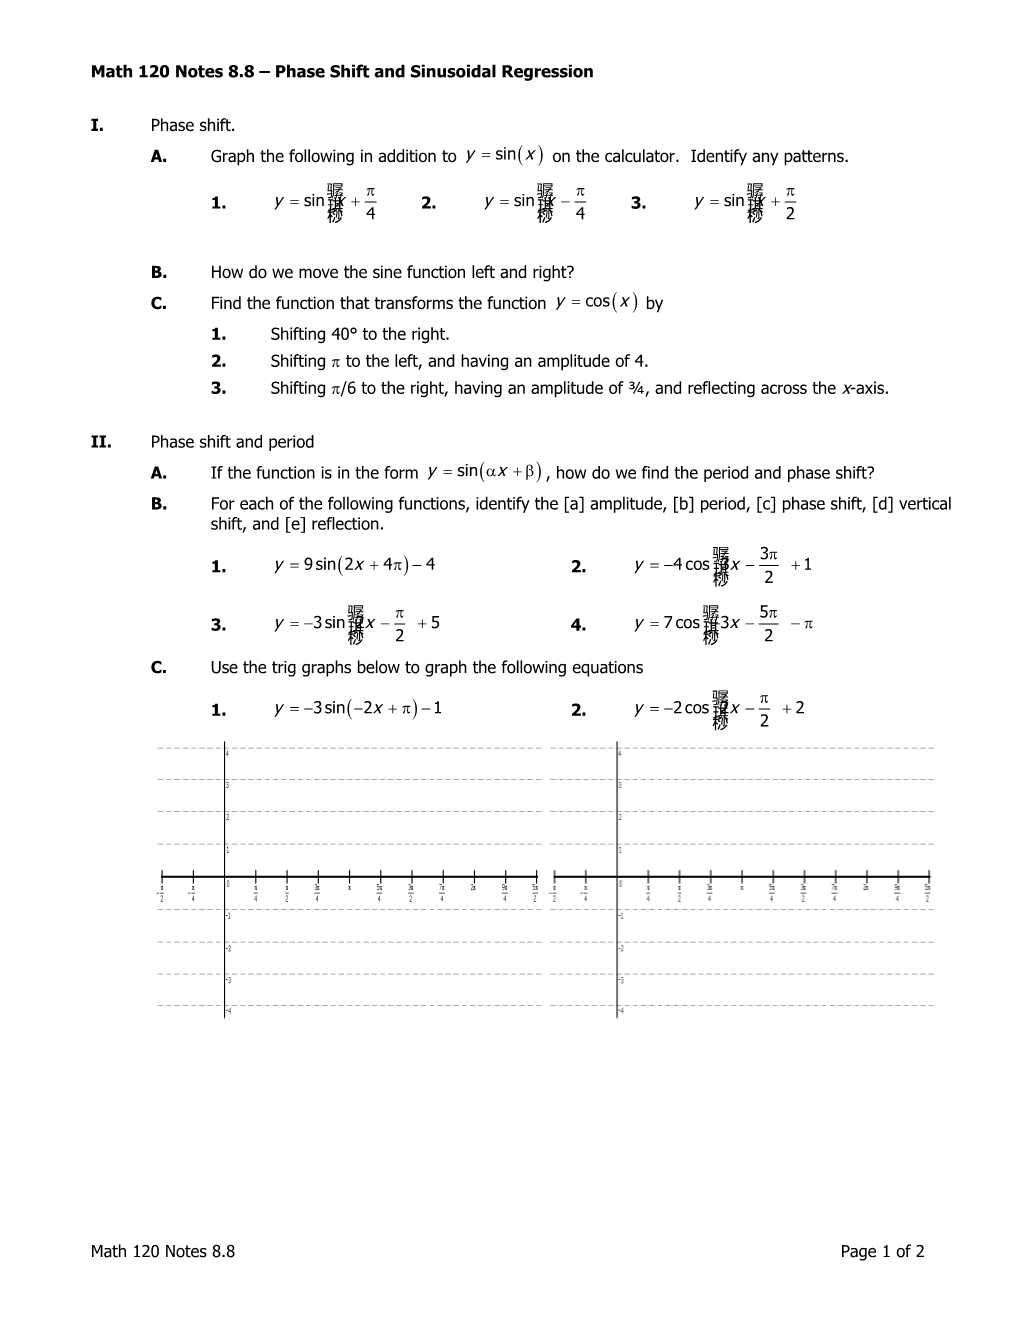 Math 120 Notes 8.8 Phase Shift and Sinusoidal Regression